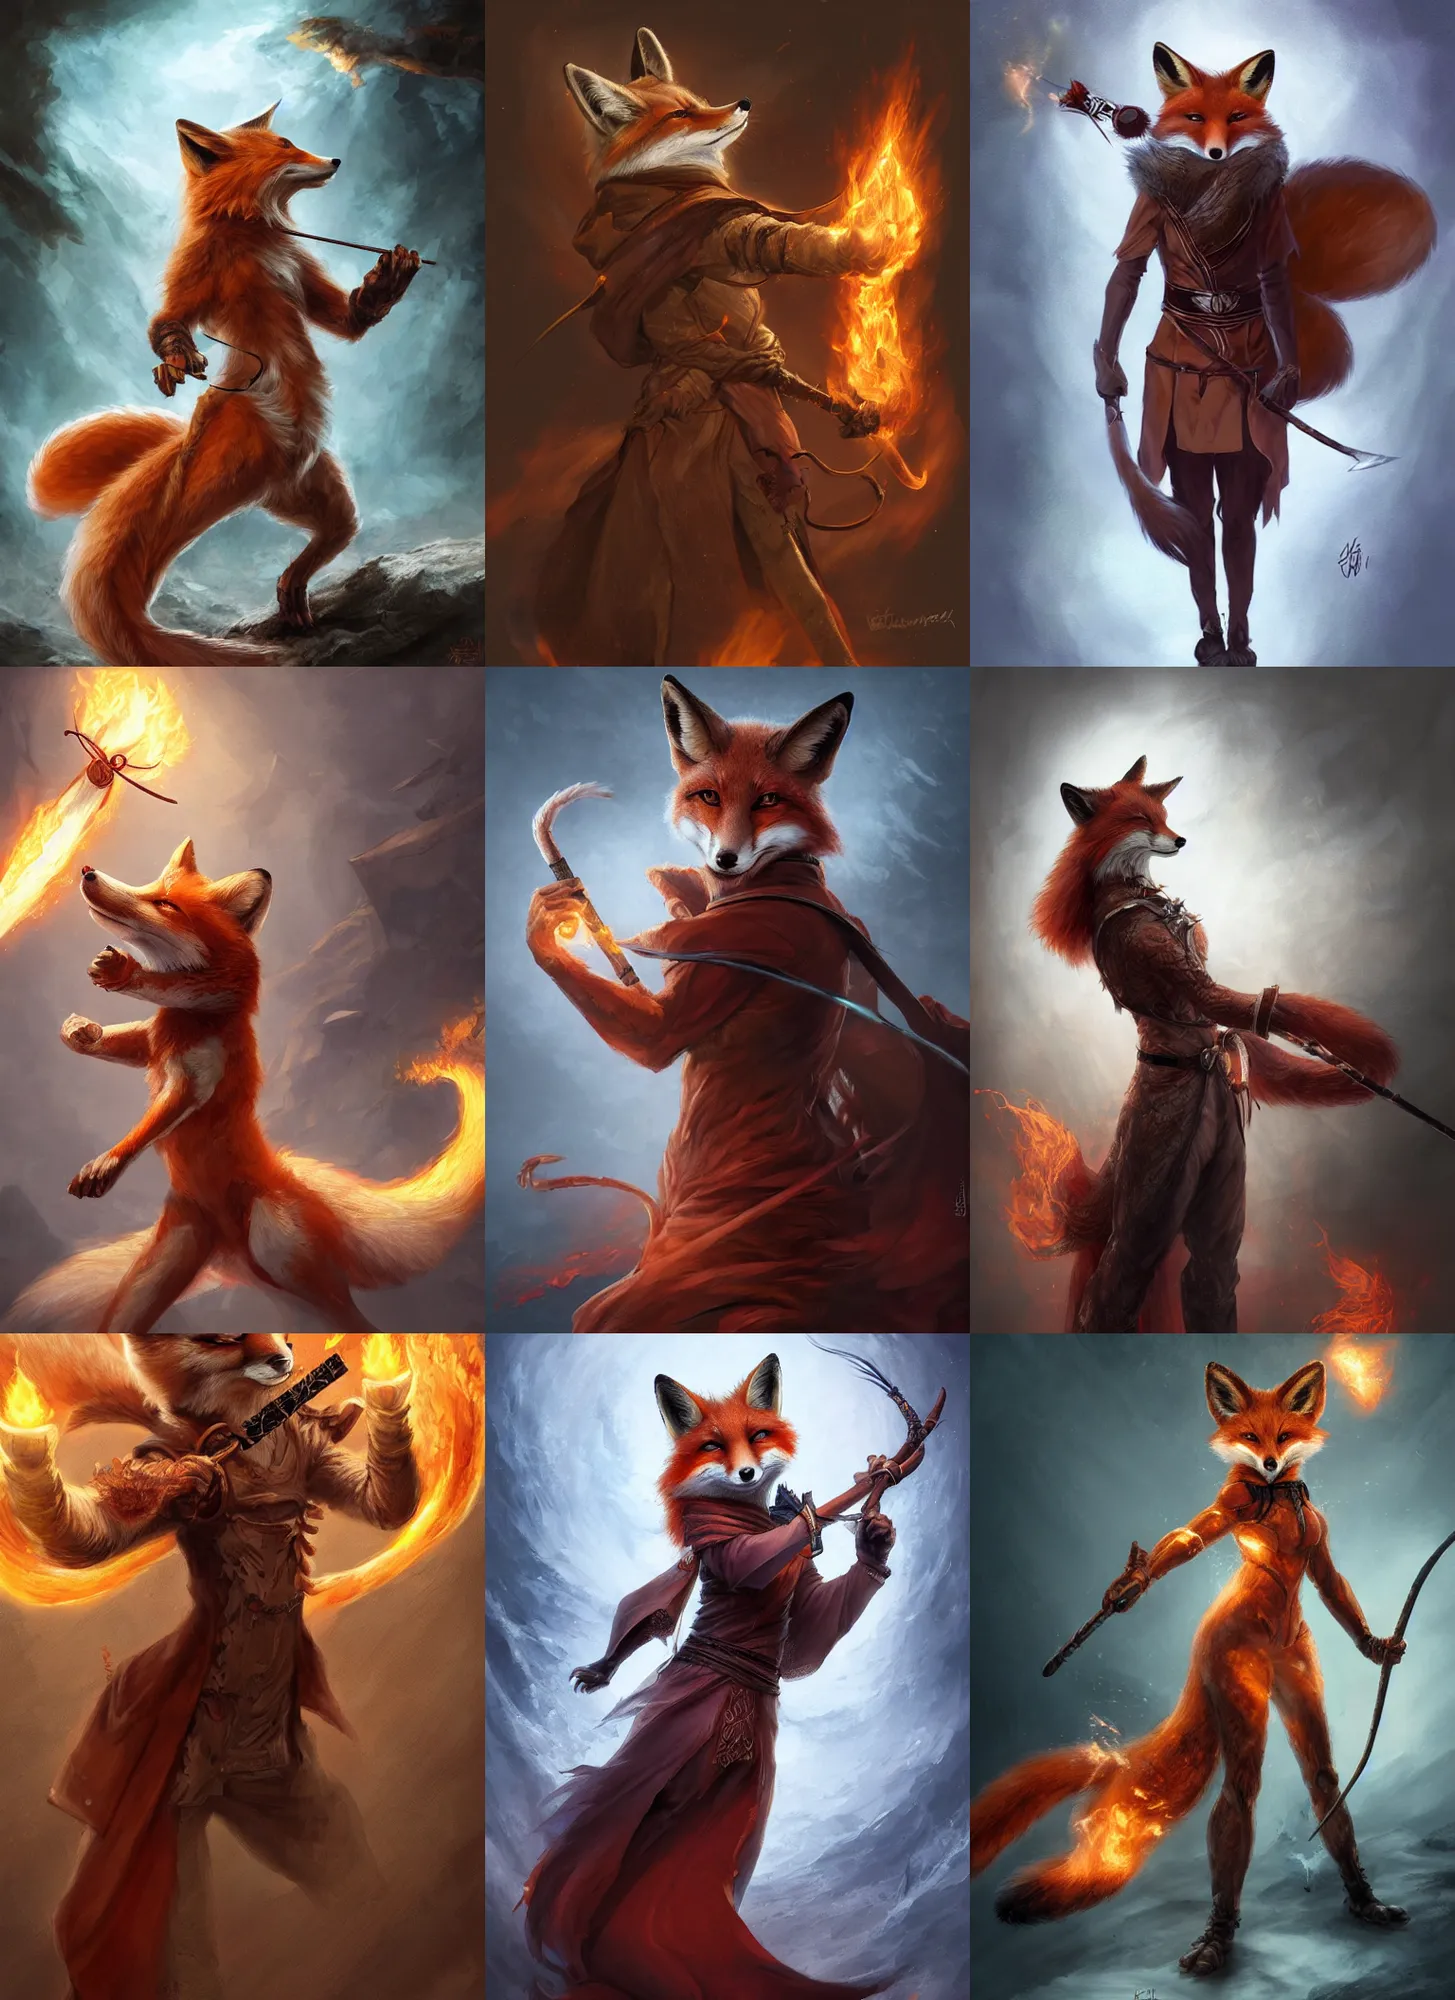 Prompt: anthropomorphic fox firebender holding a wand, kitsune, full body, digital painting, intricate, sharp focus, aleksi briclot, rutkowski